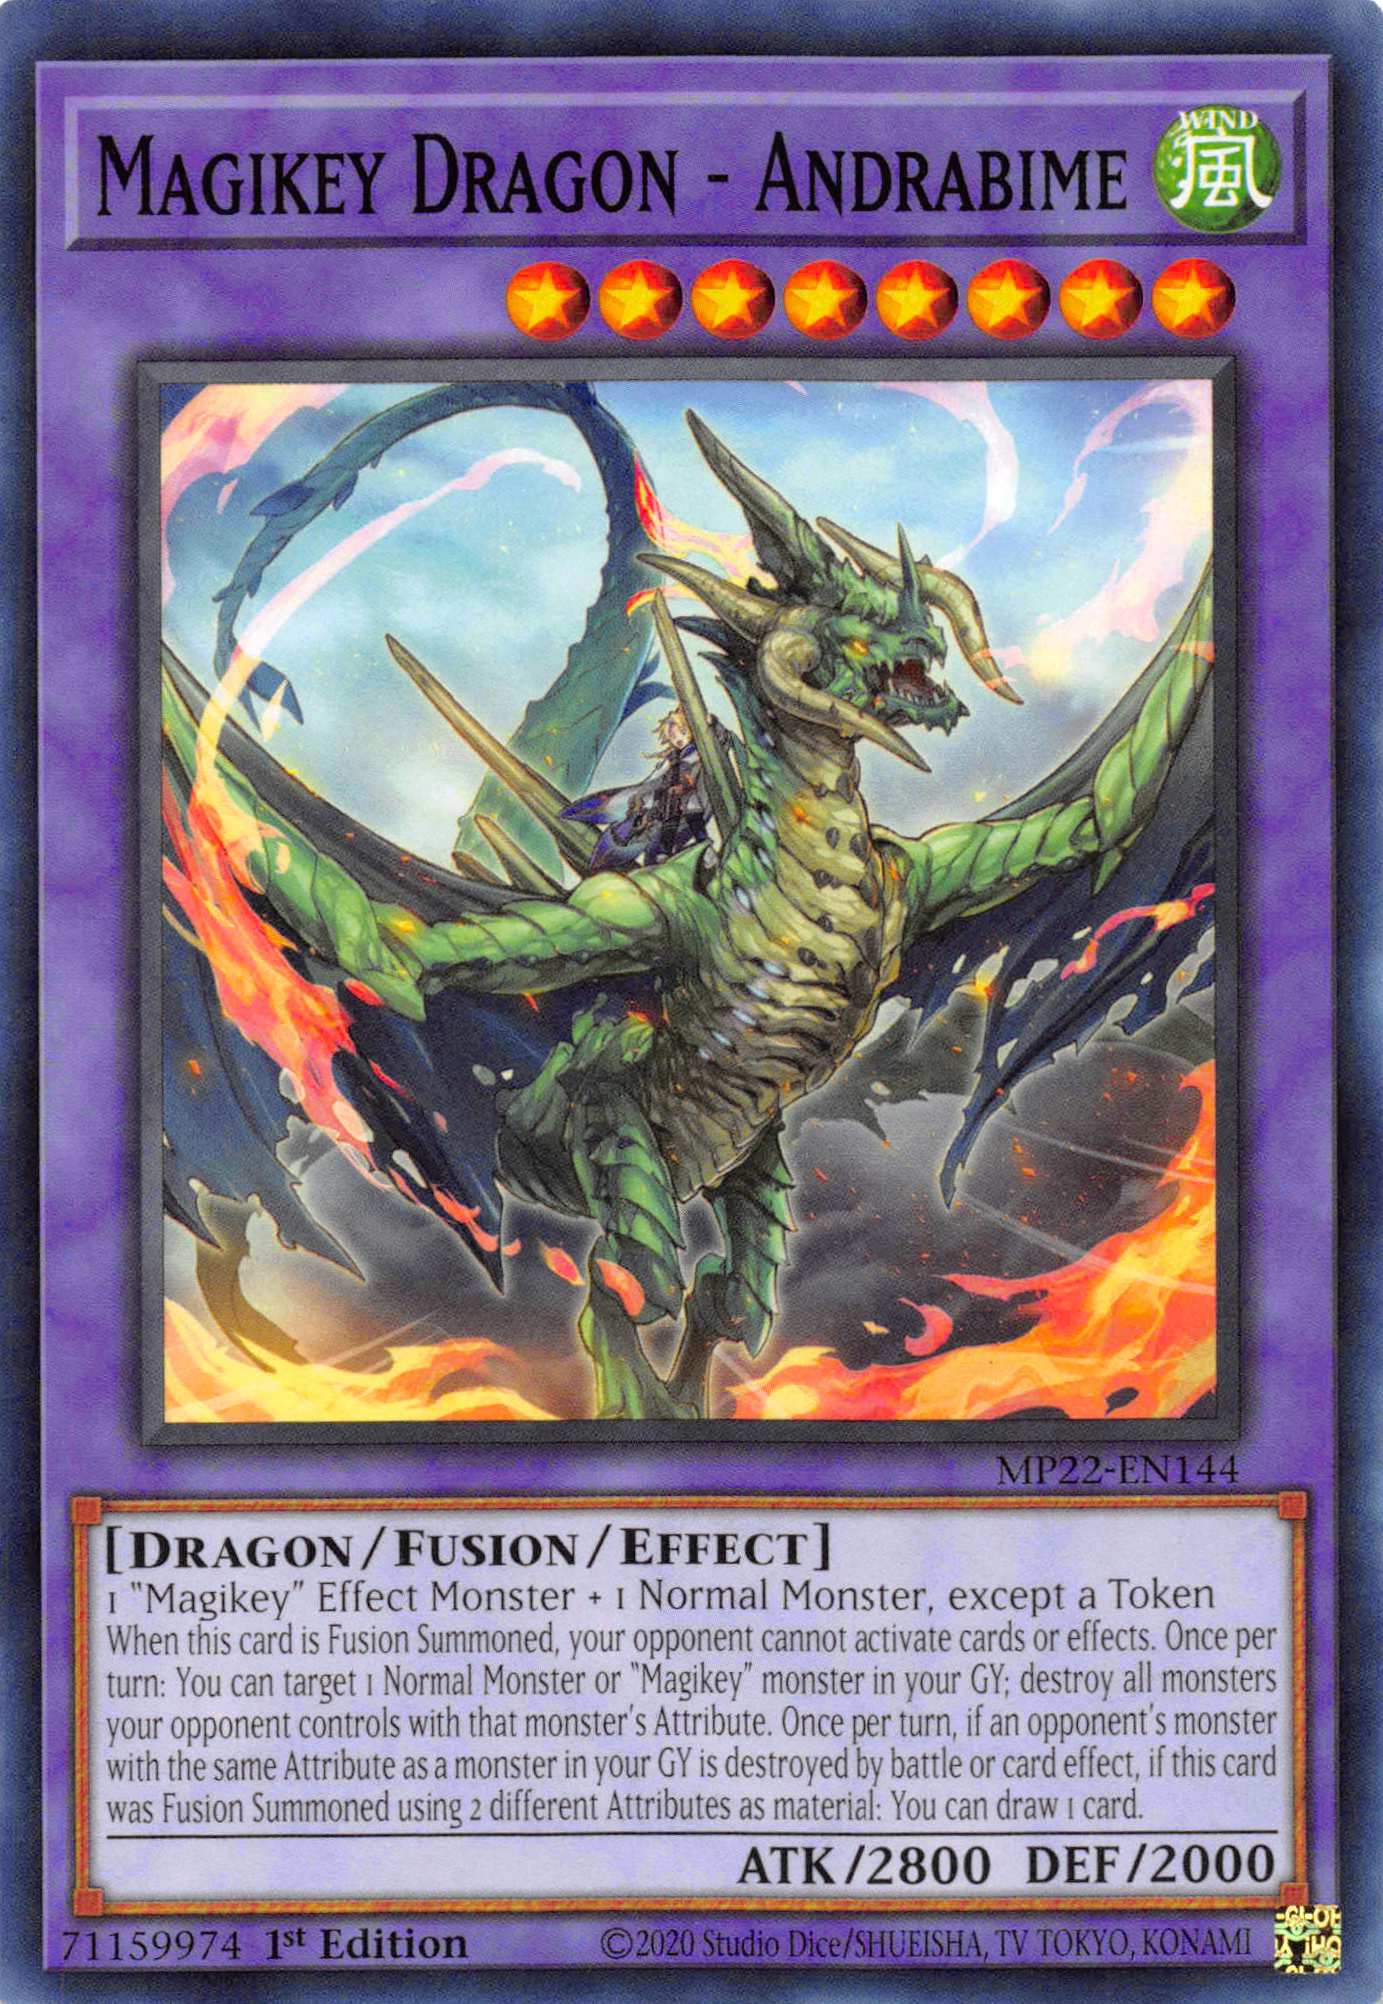 Magikey Dragon - Andrabime [MP22-EN144] Common